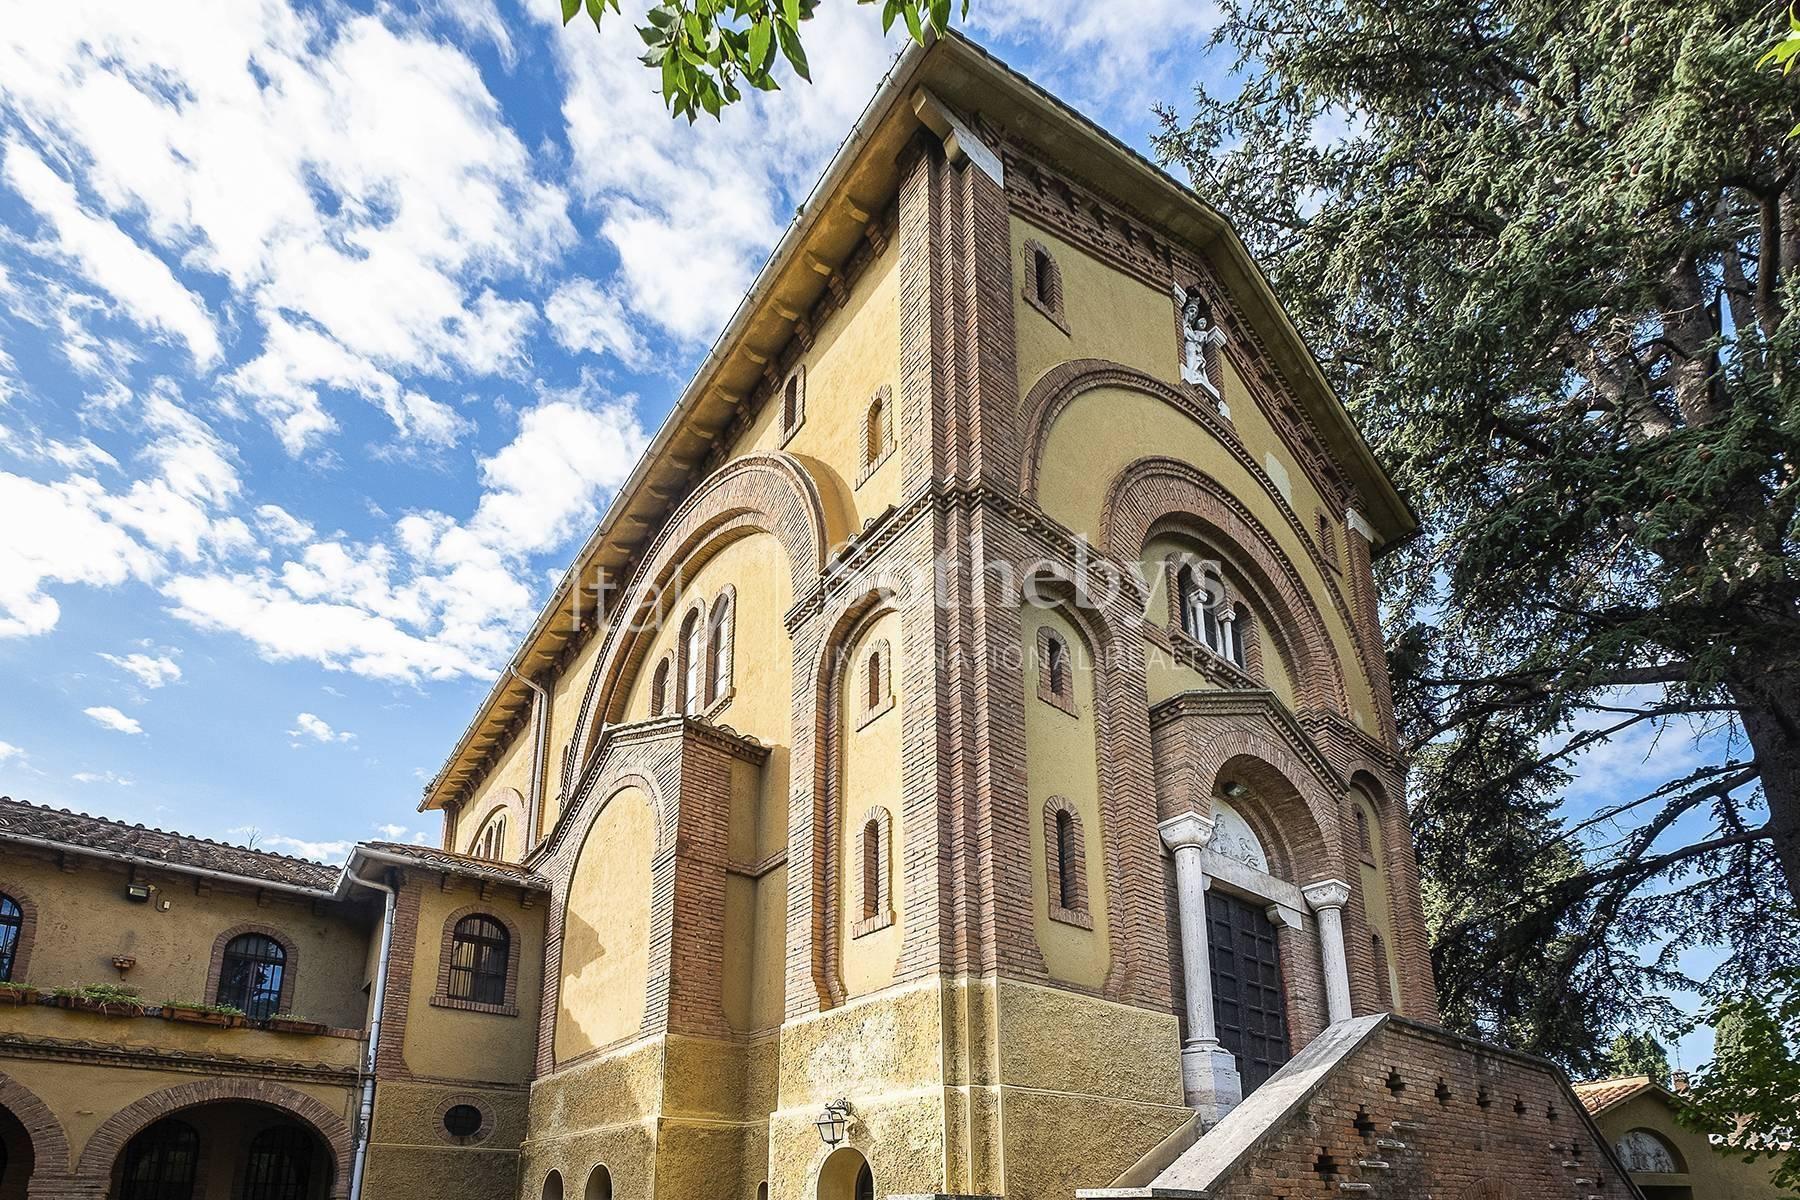 Magnificent monastery in Rome prime location - 5